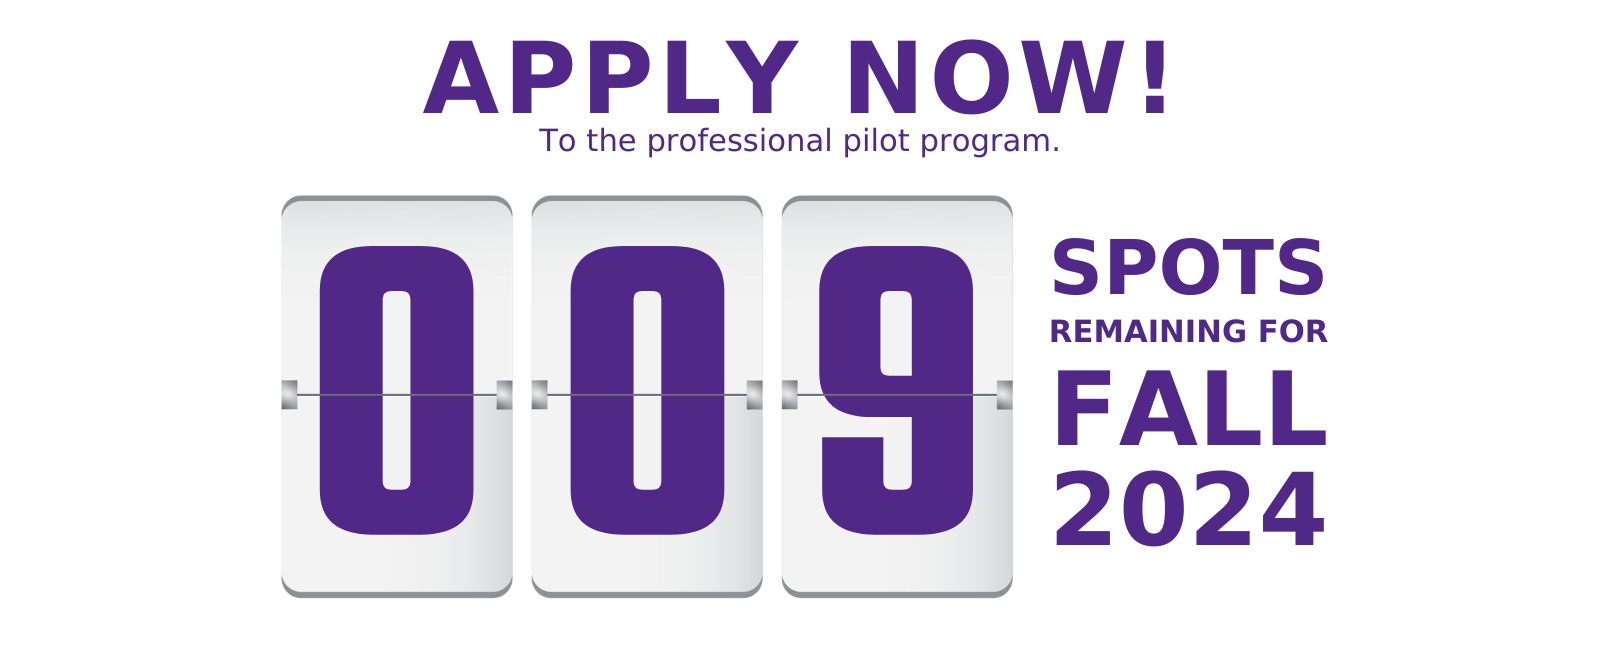 Professional Pilot Spots Countdown